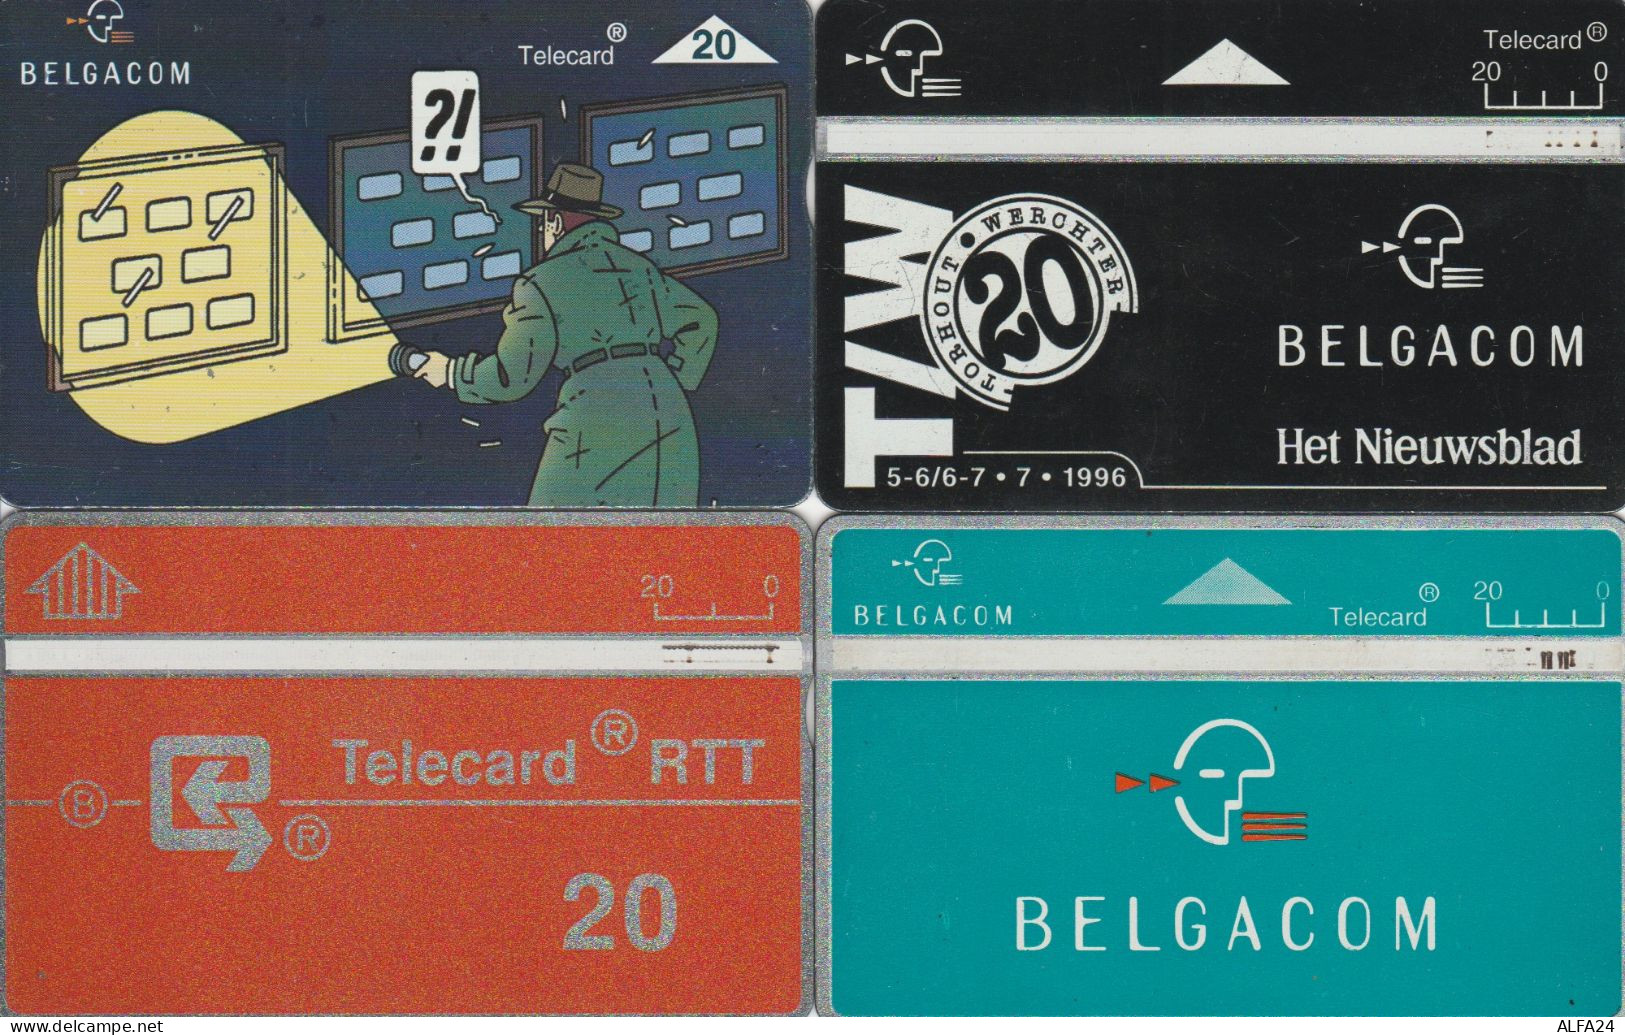 PHONE CARD 4 BELGIO LANDYS (CK941 - Senza Chip